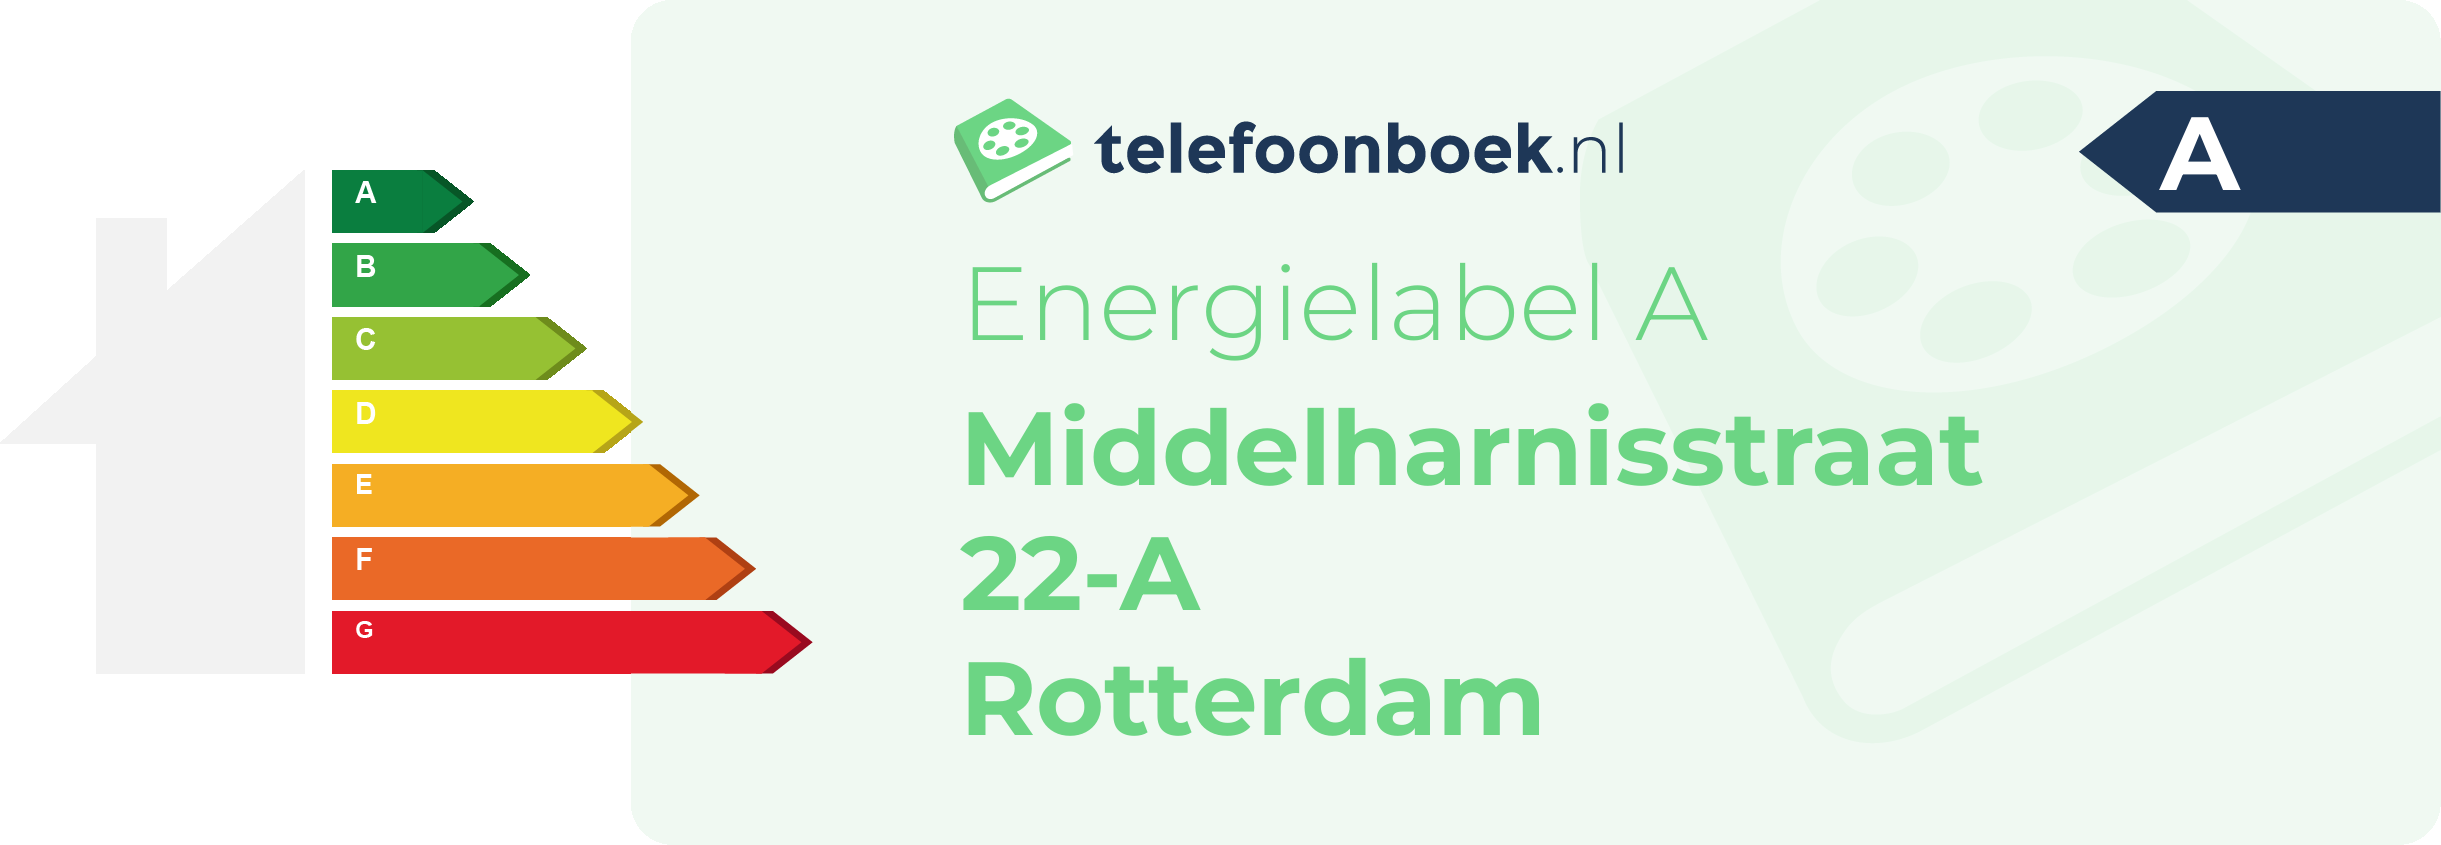 Energielabel Middelharnisstraat 22-A Rotterdam